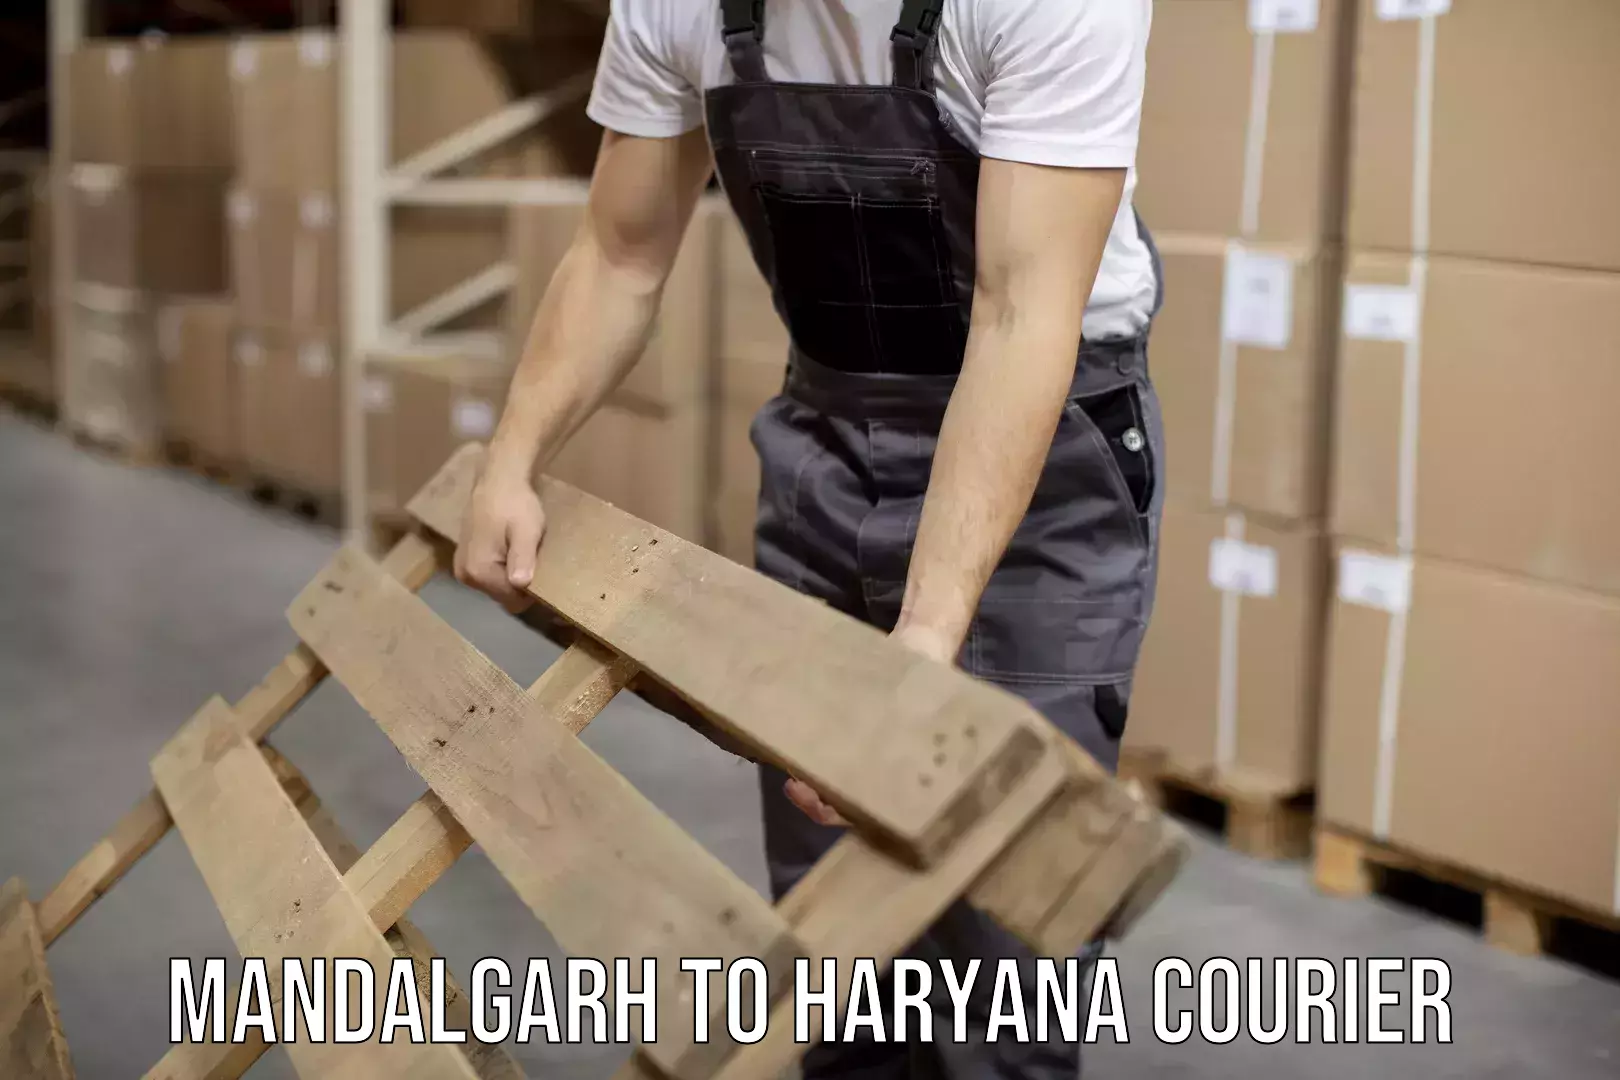 Courier service comparison Mandalgarh to Haryana